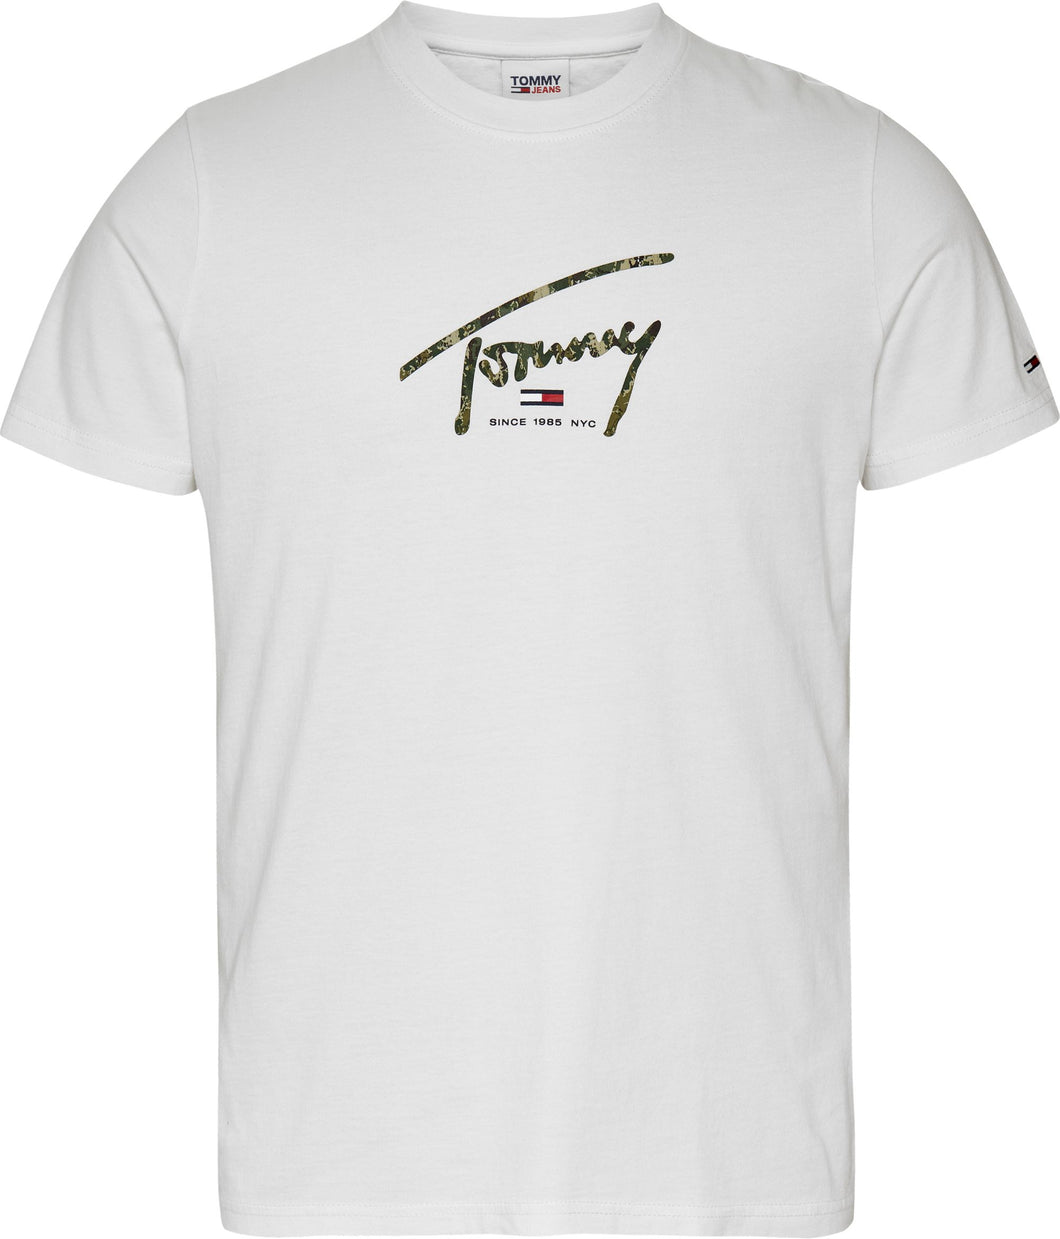 T-shirt Tommy logo camo